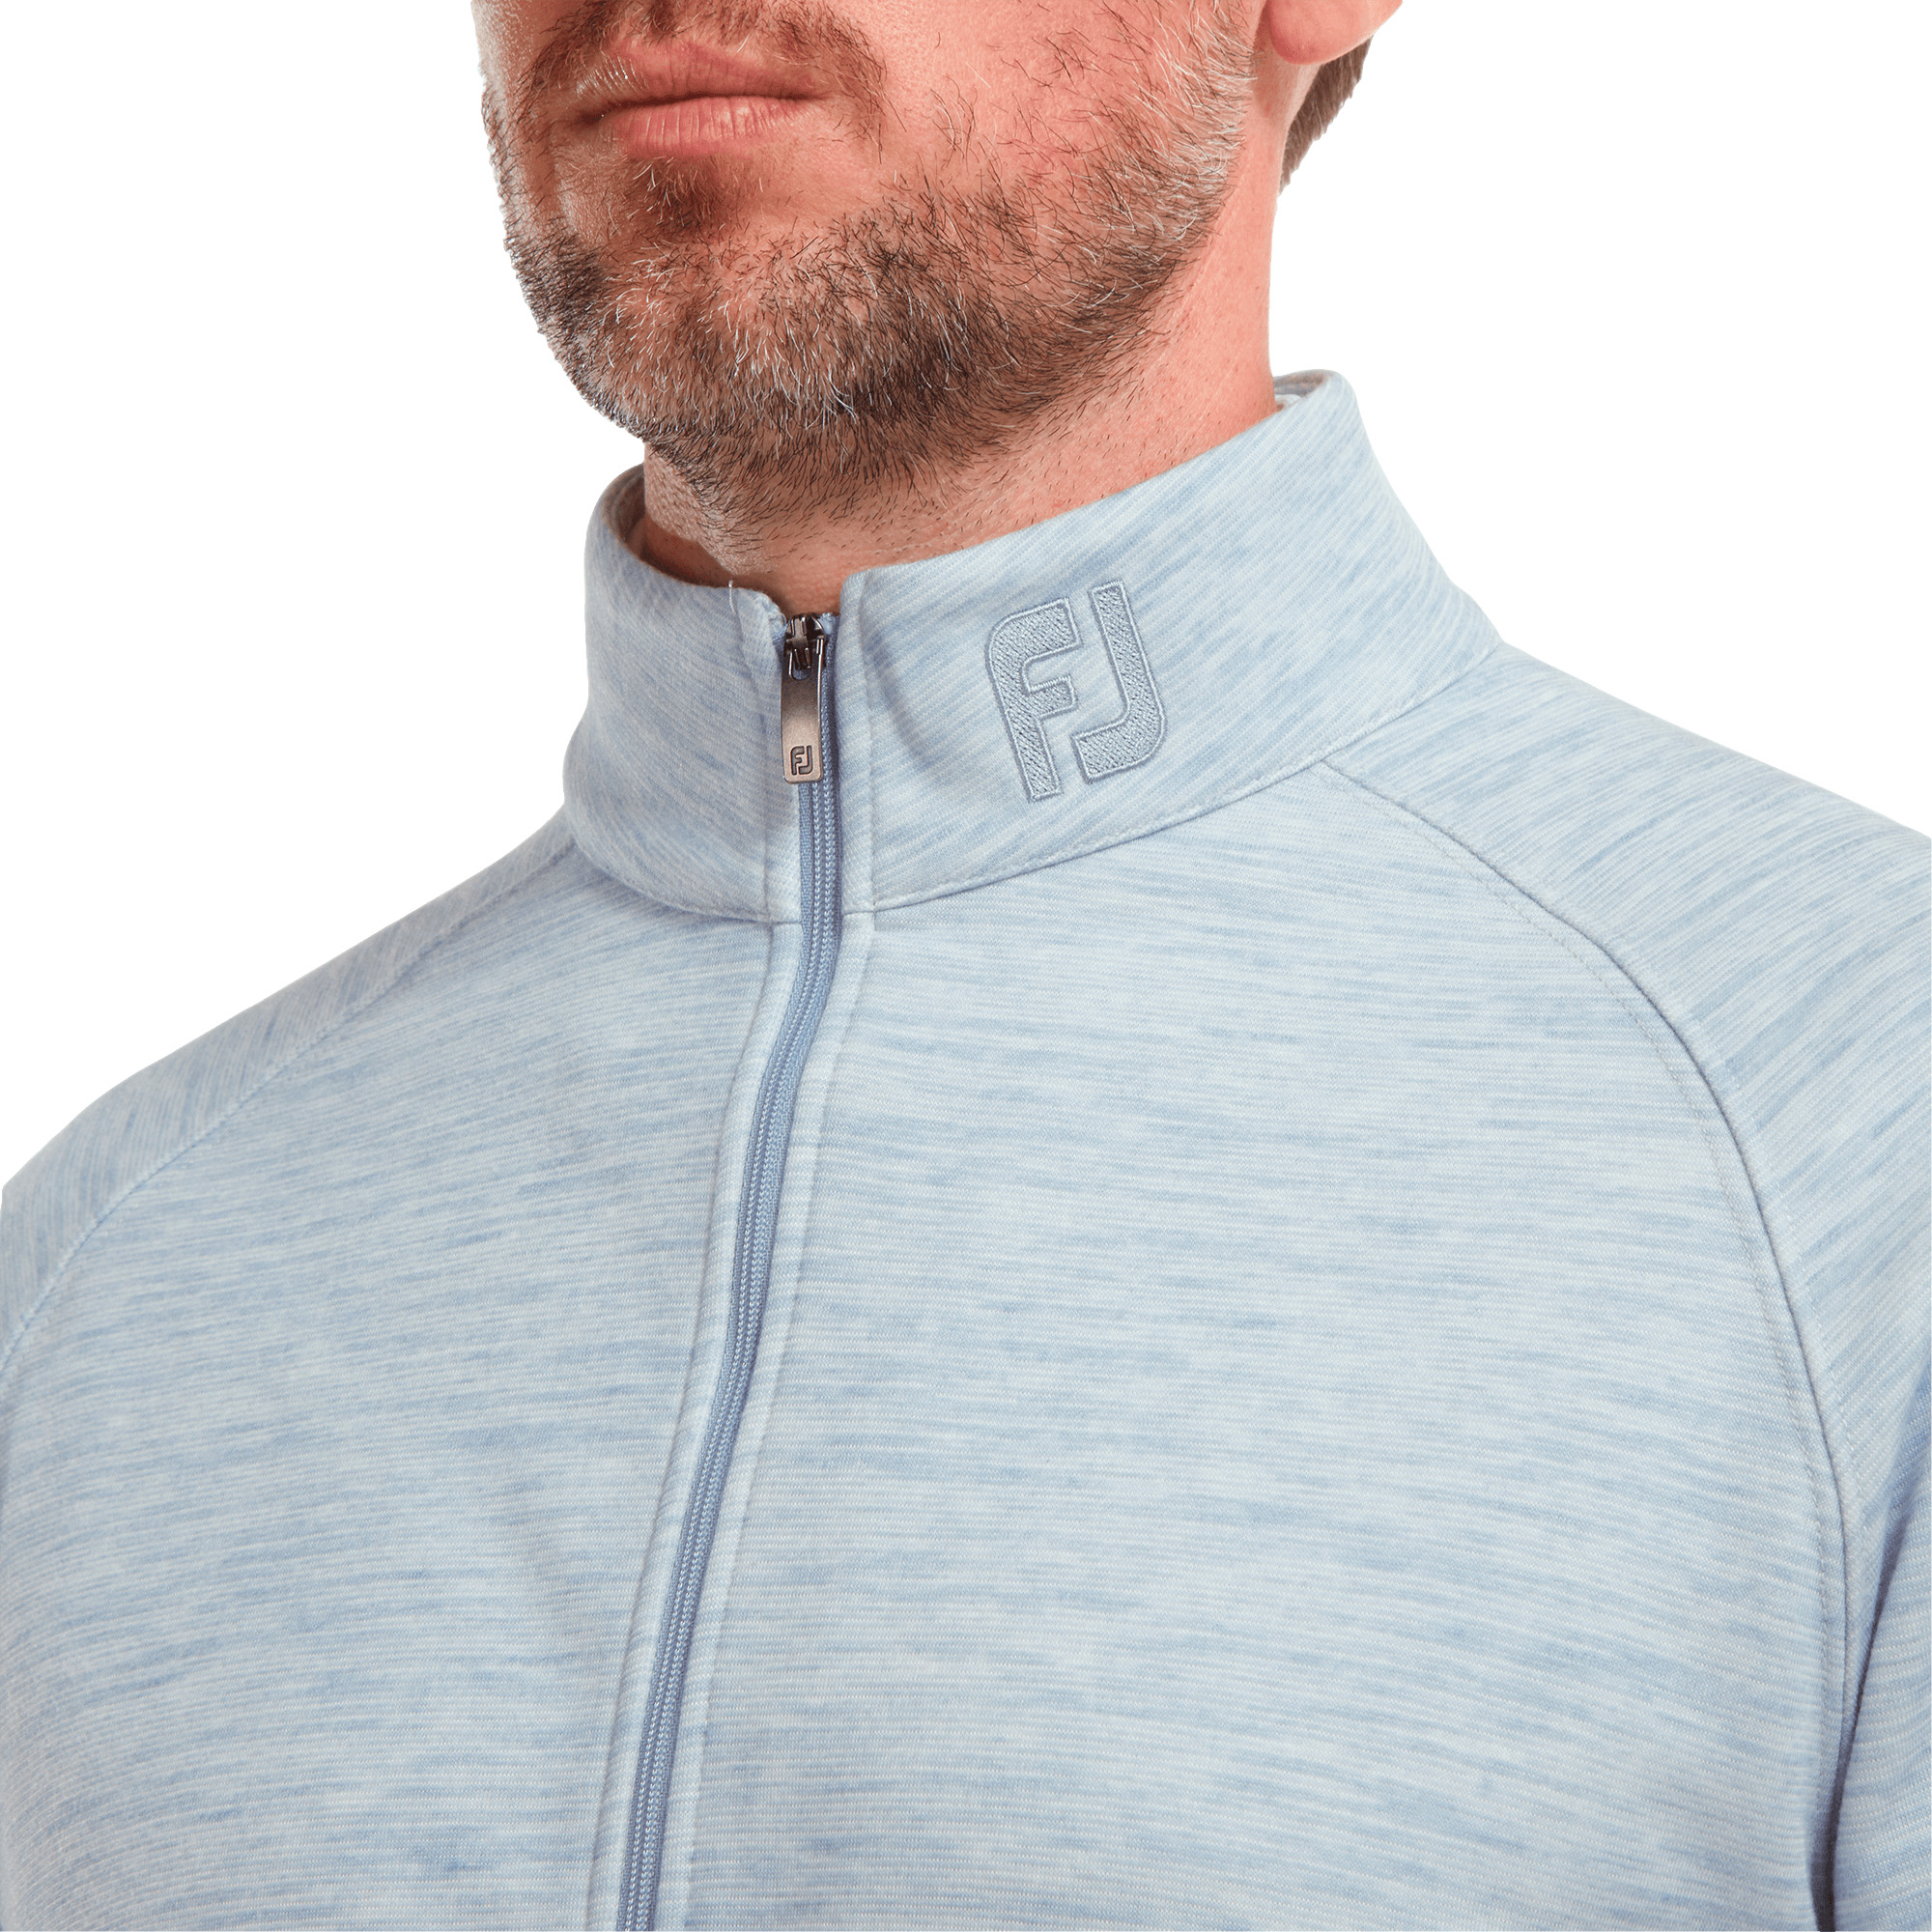 FootJoy Space Dye Fleece Full Zip Mid Layer Pullover 